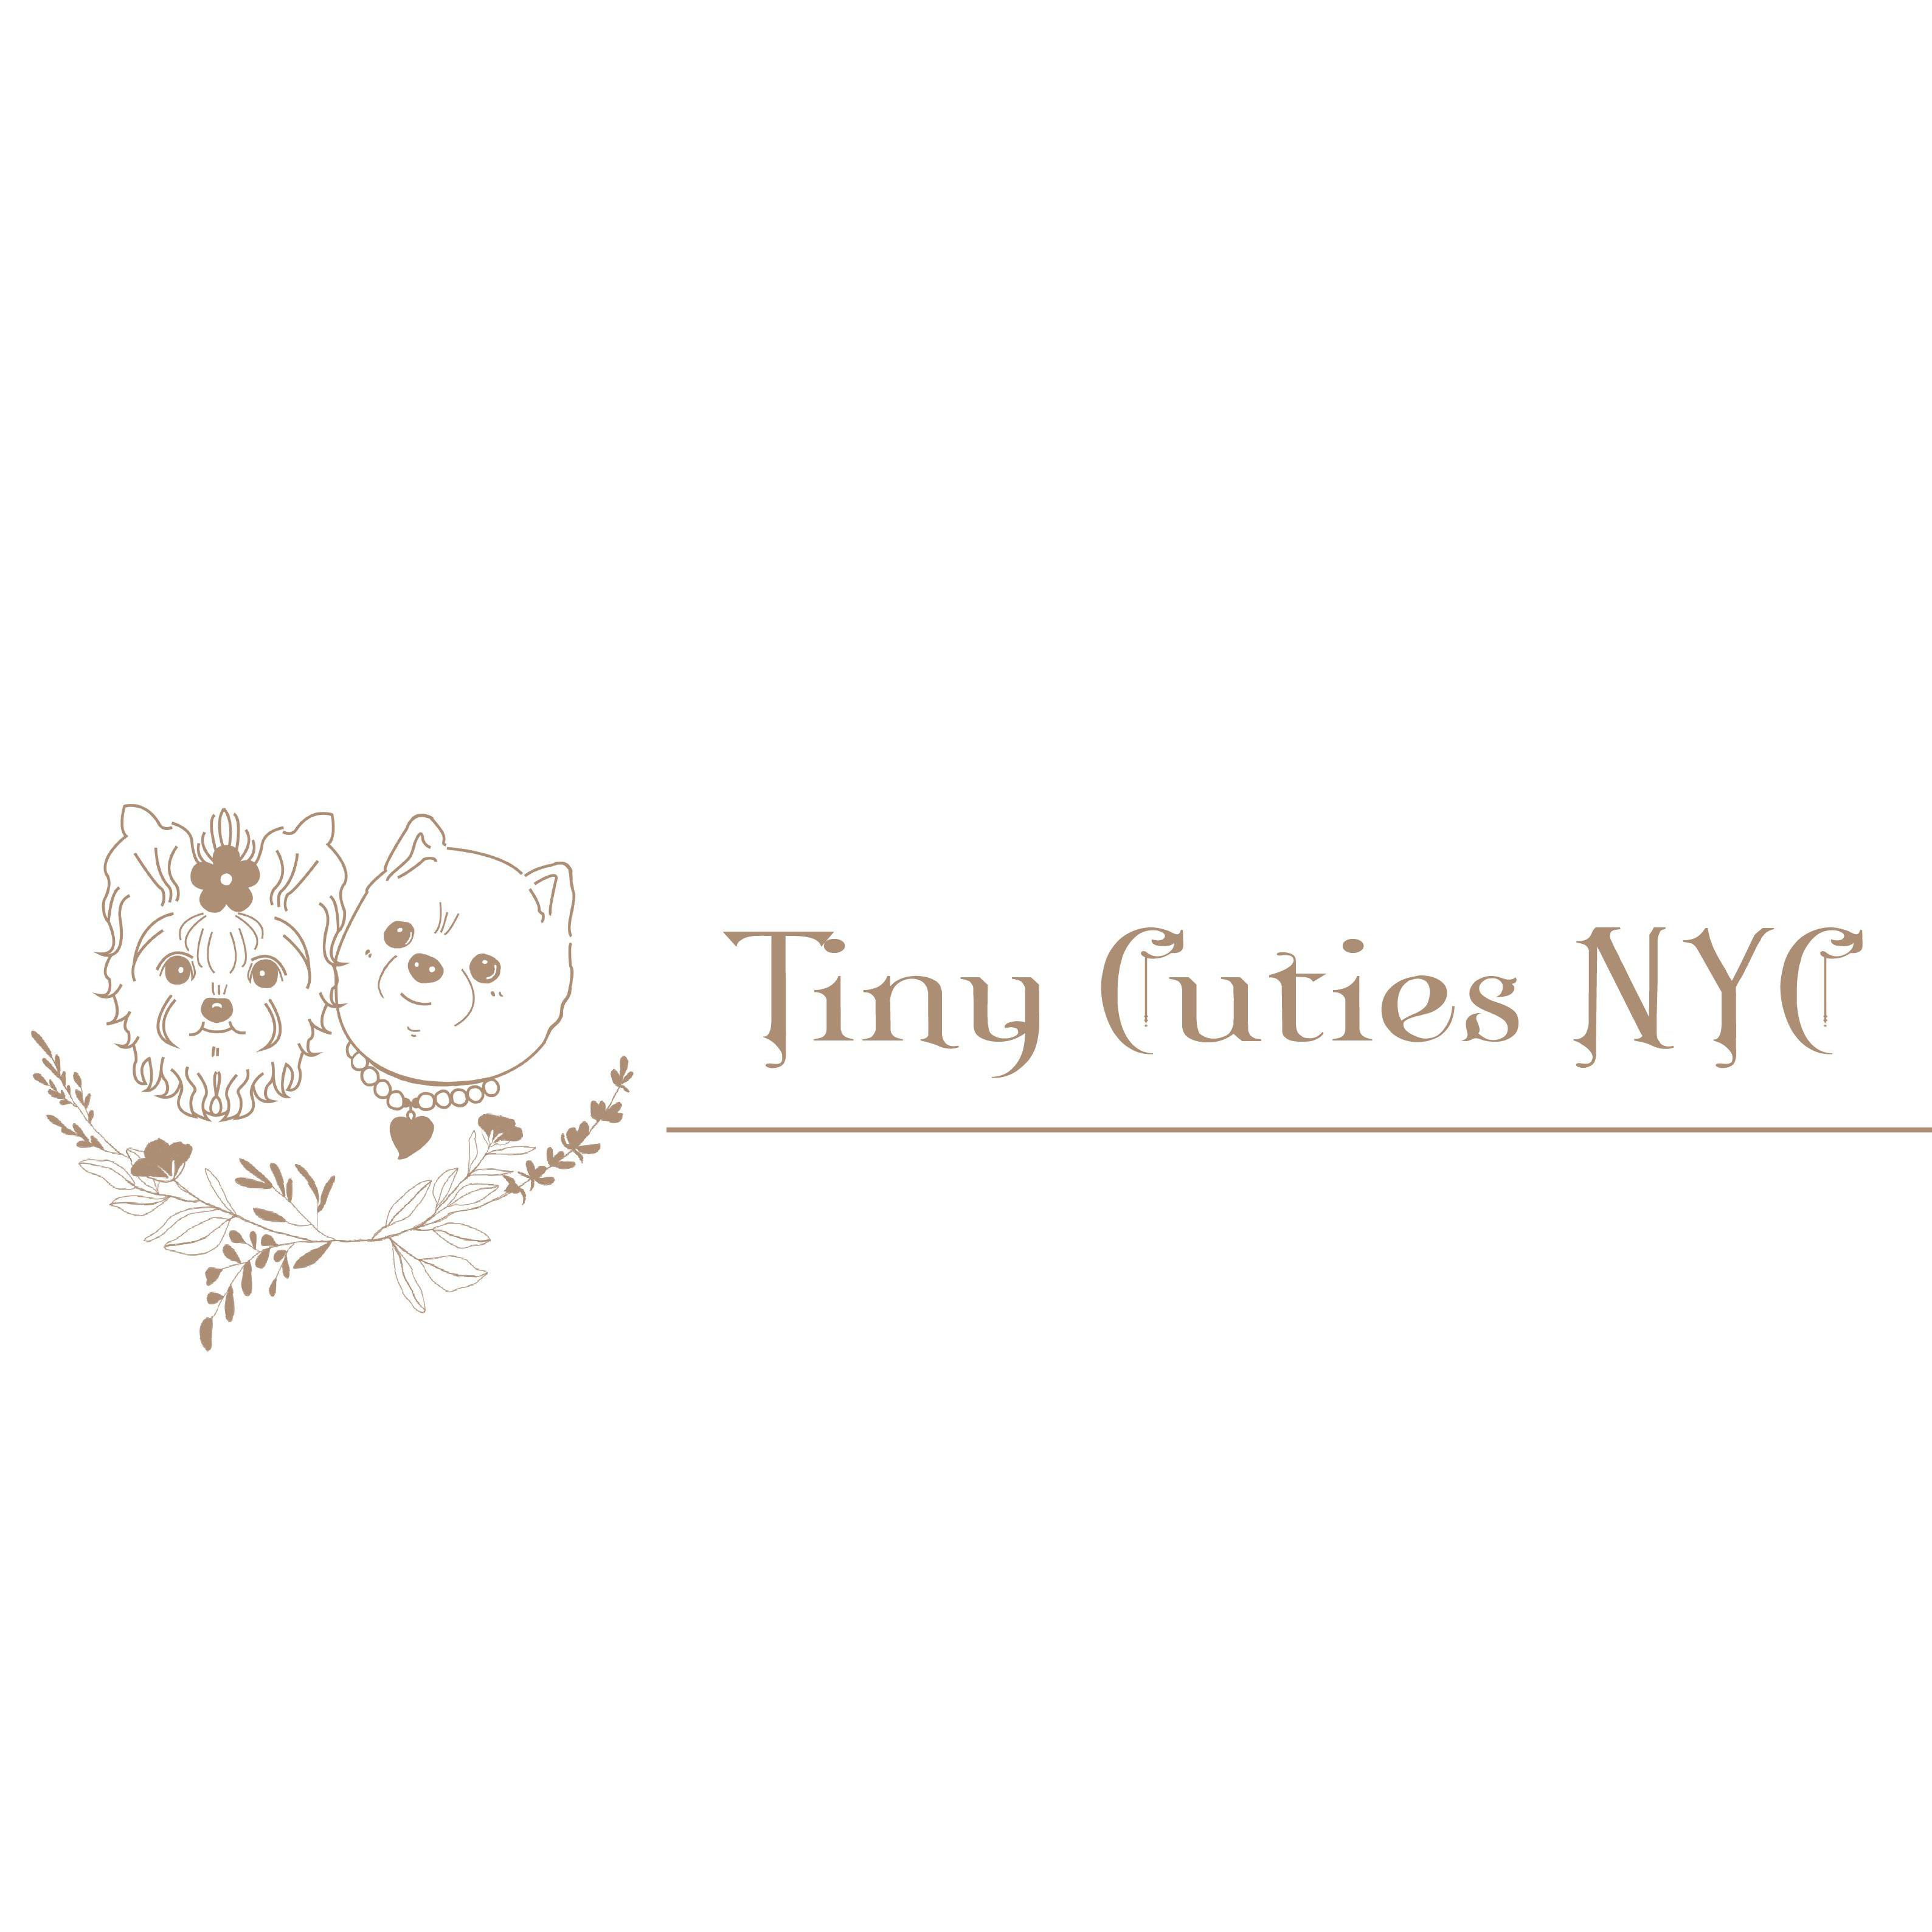 Tiny Cuties NYC